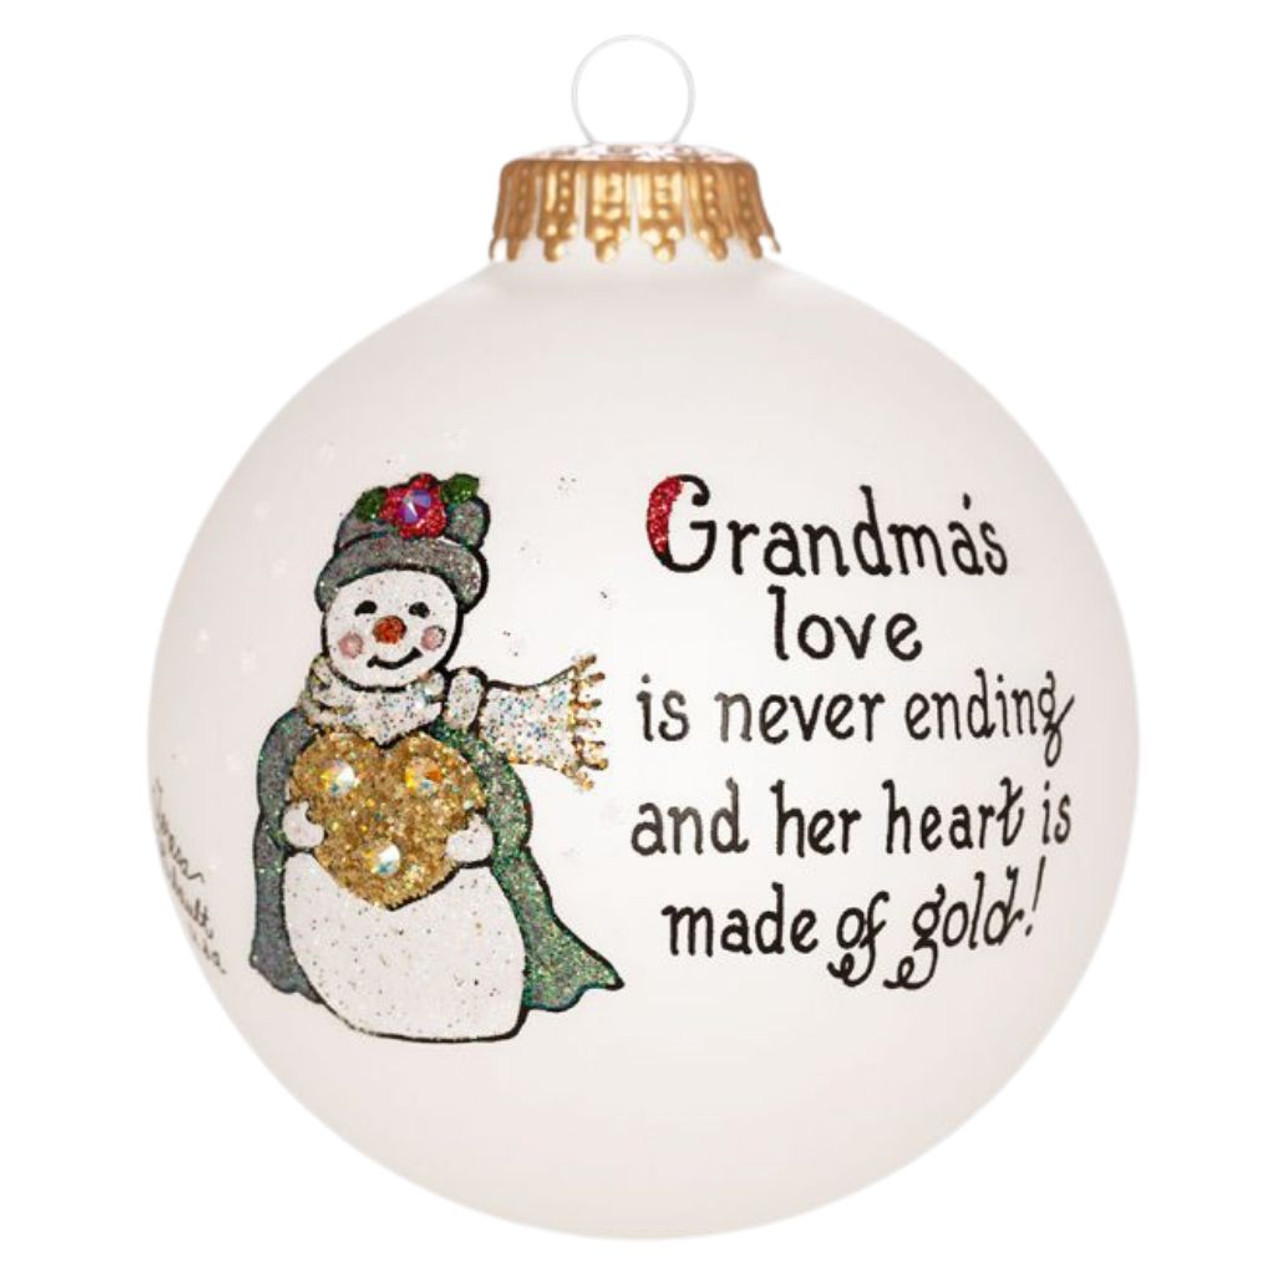 54 Heartwarming Christmas Candies Just Like Grandma Made : Hearts